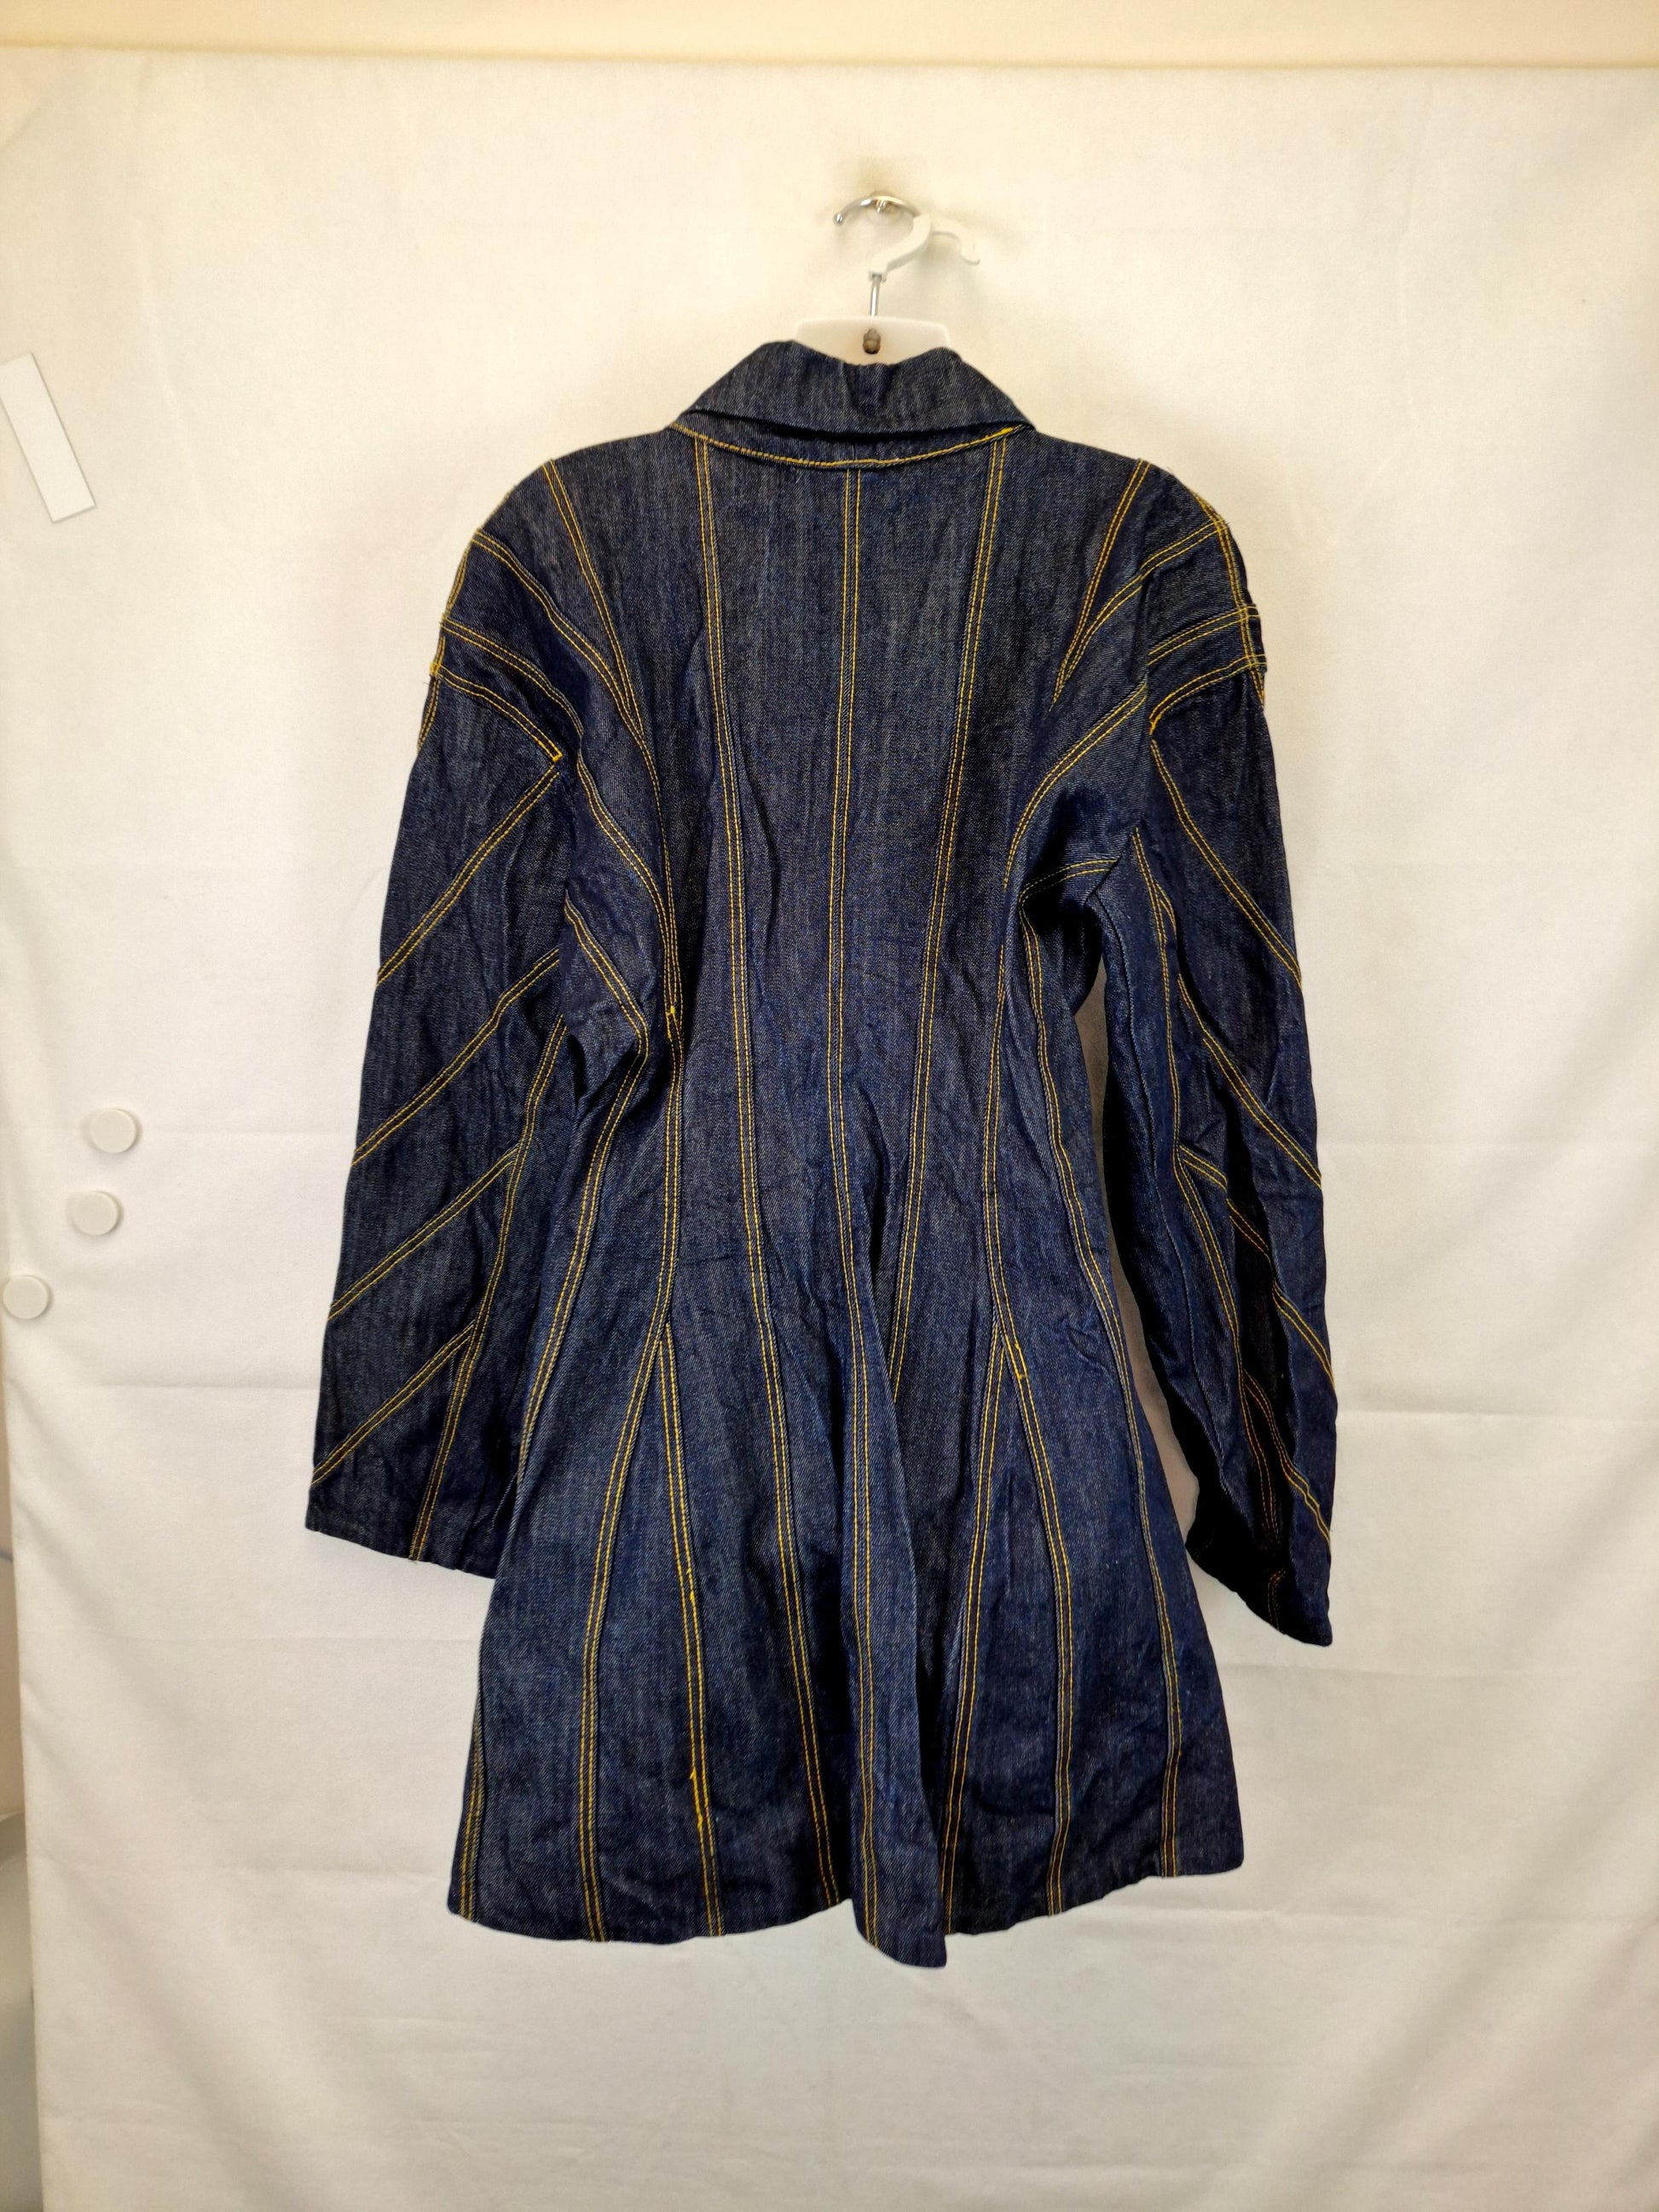 House Of CB Stylish Dark Denim Blazer Mini Dress Size L by SwapUp-Online Second Hand Store-Online Thrift Store